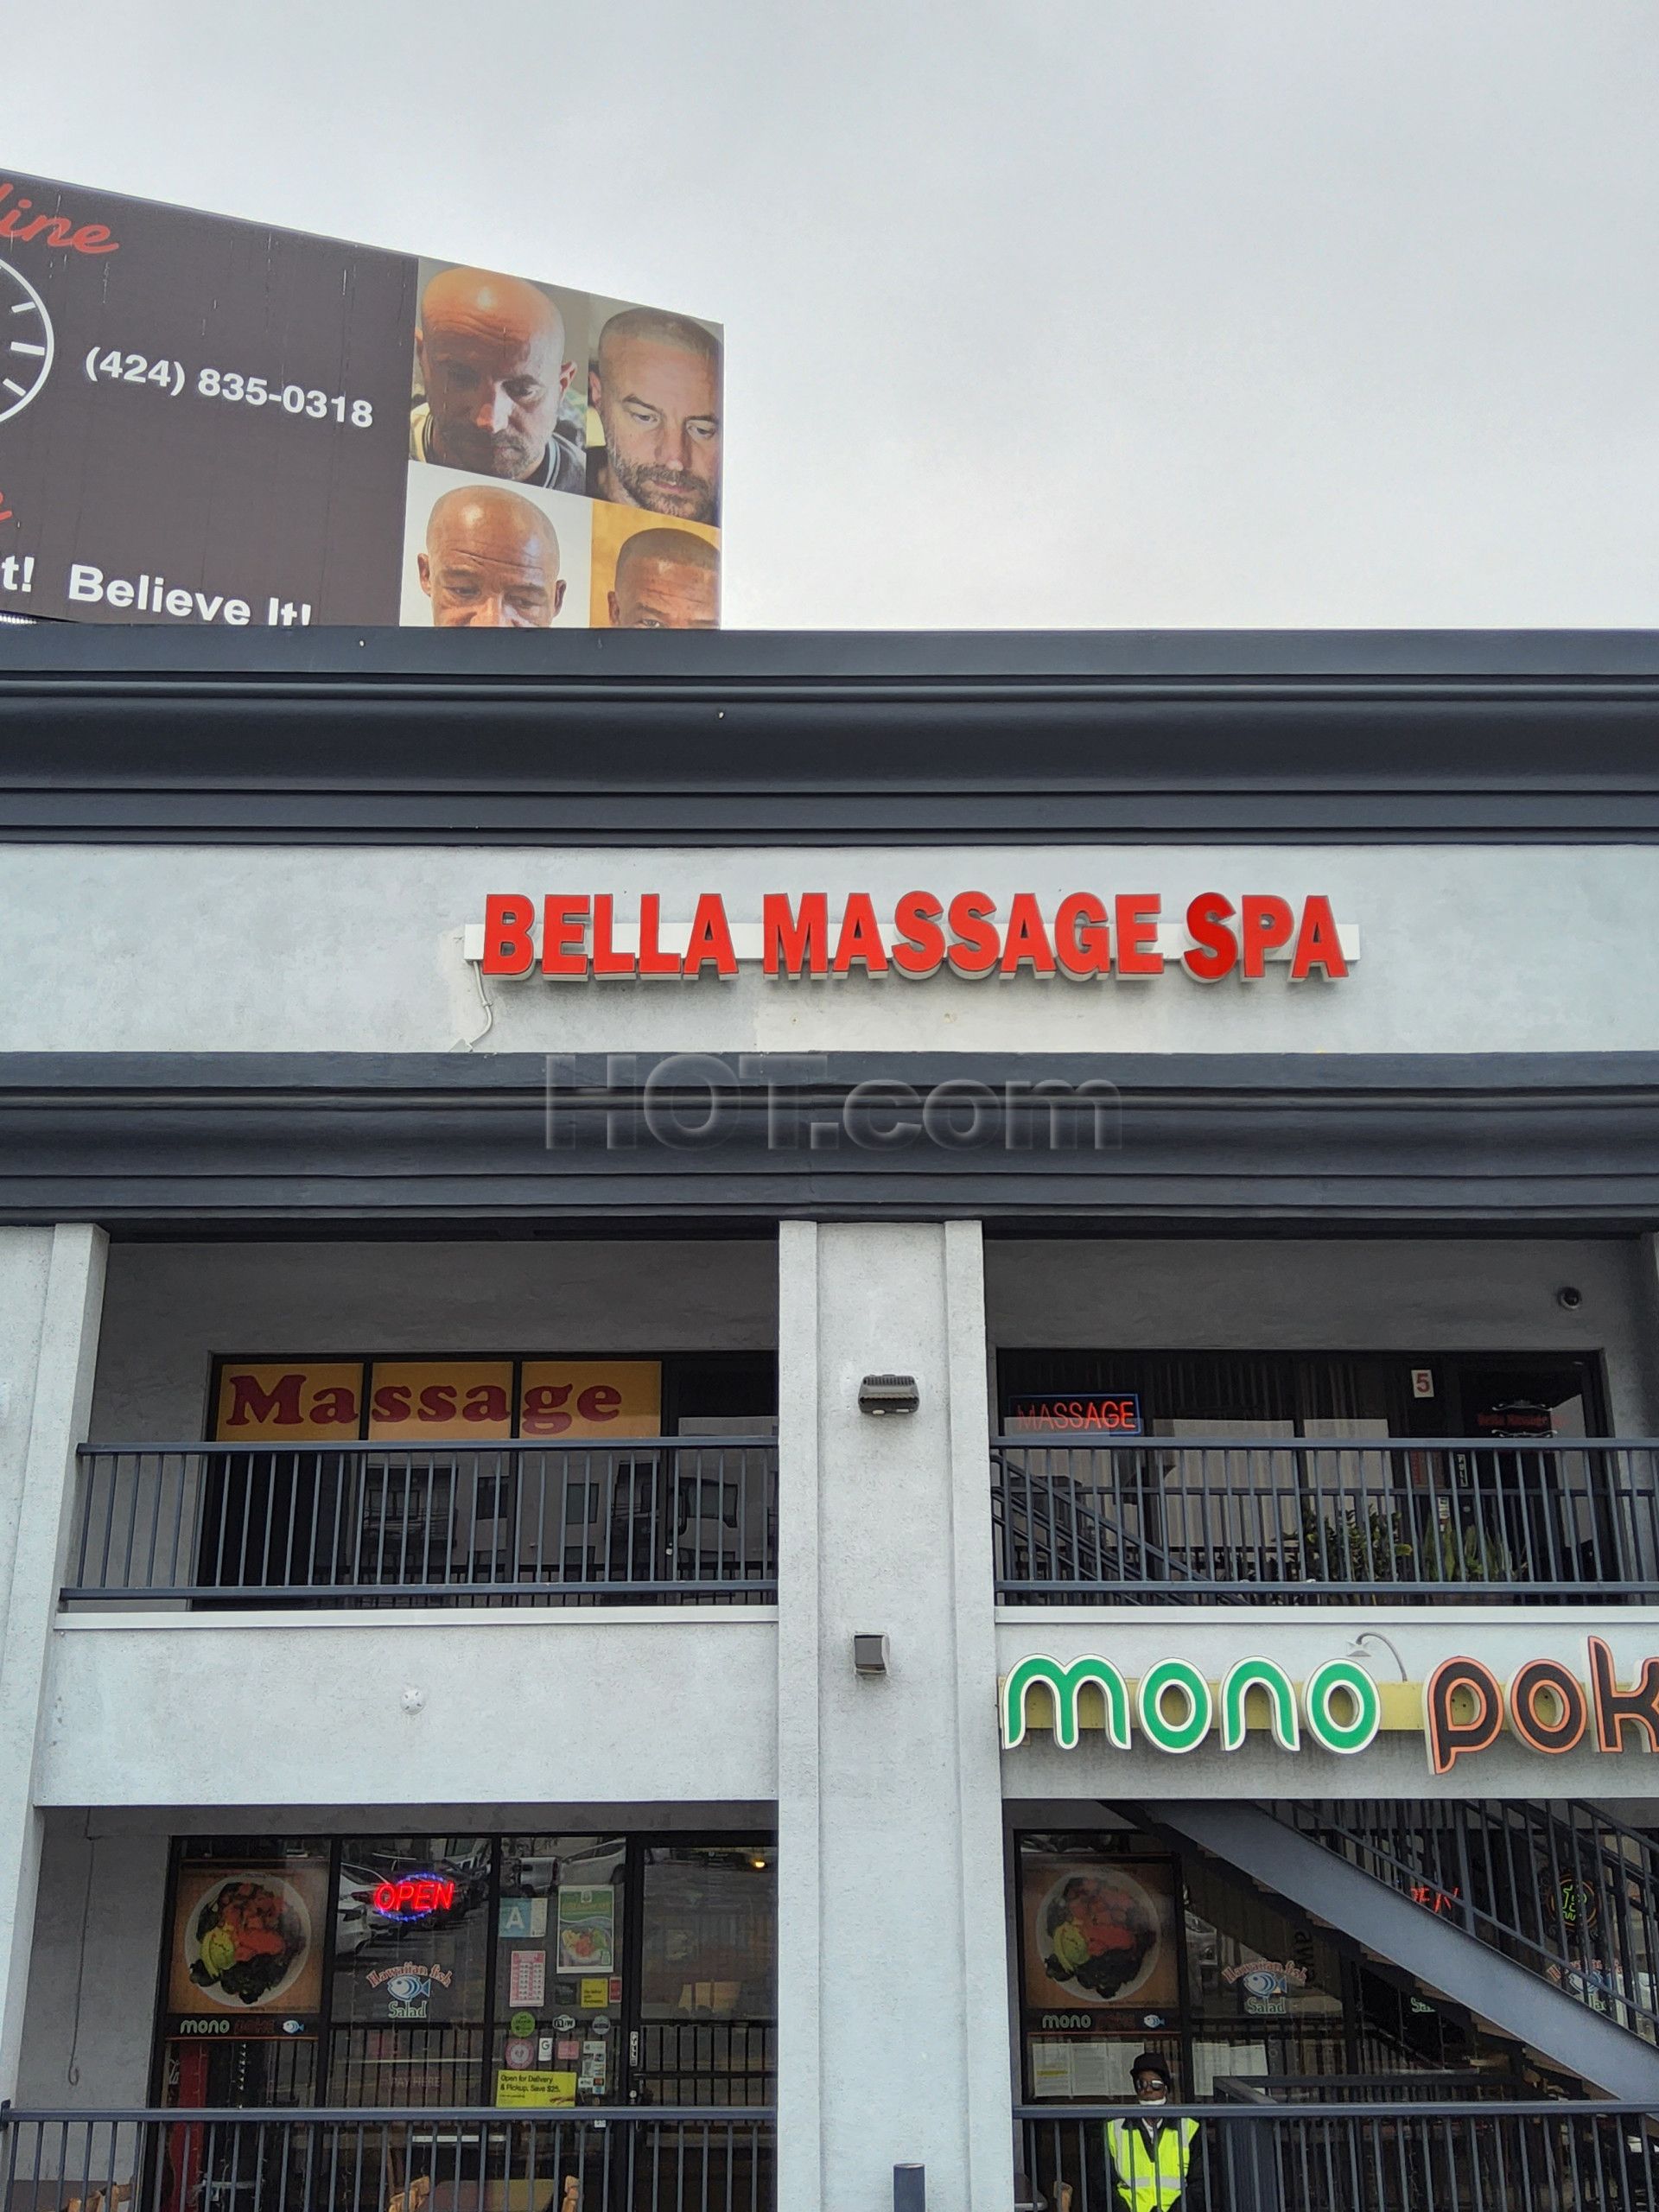 Los Angeles, California Bella Massage Spa